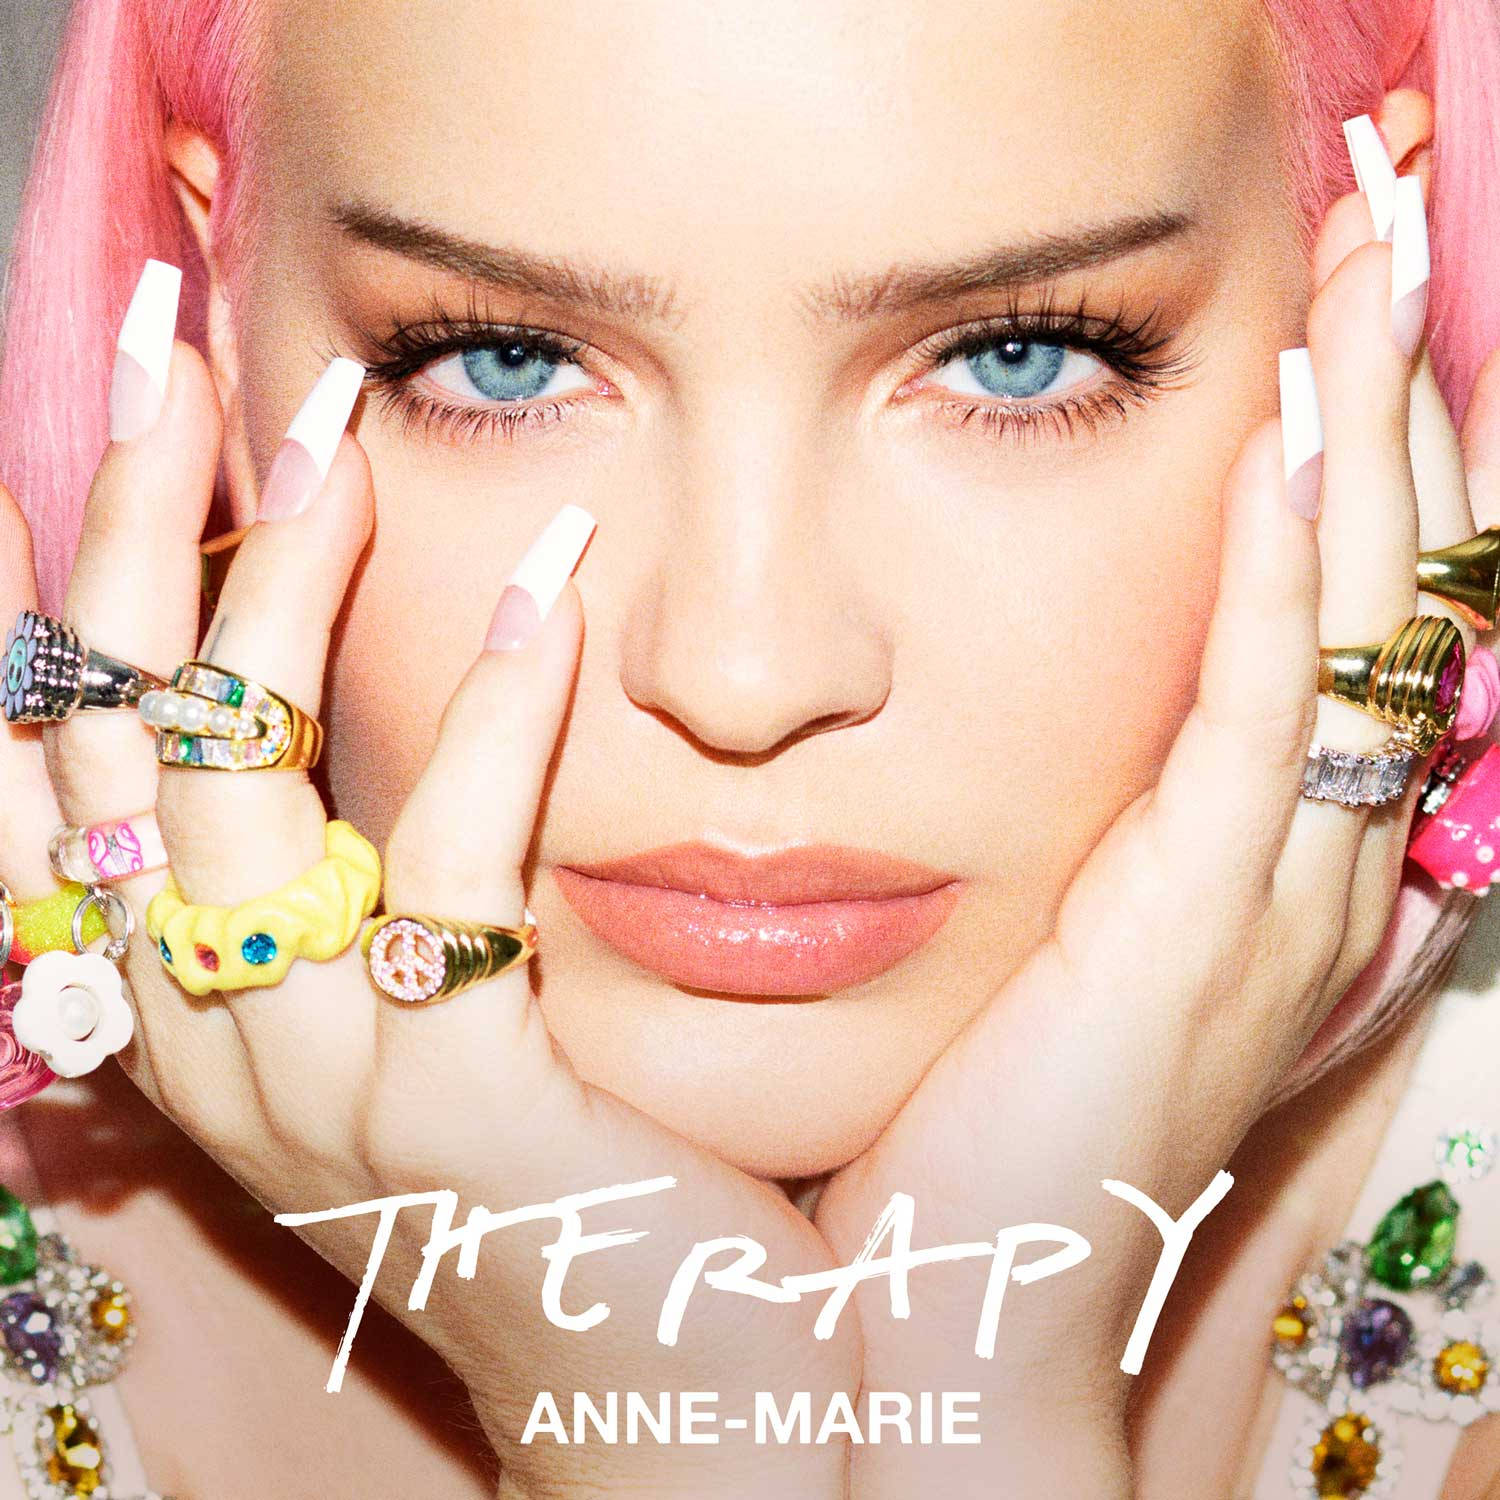 Anne-marie Therapy Album